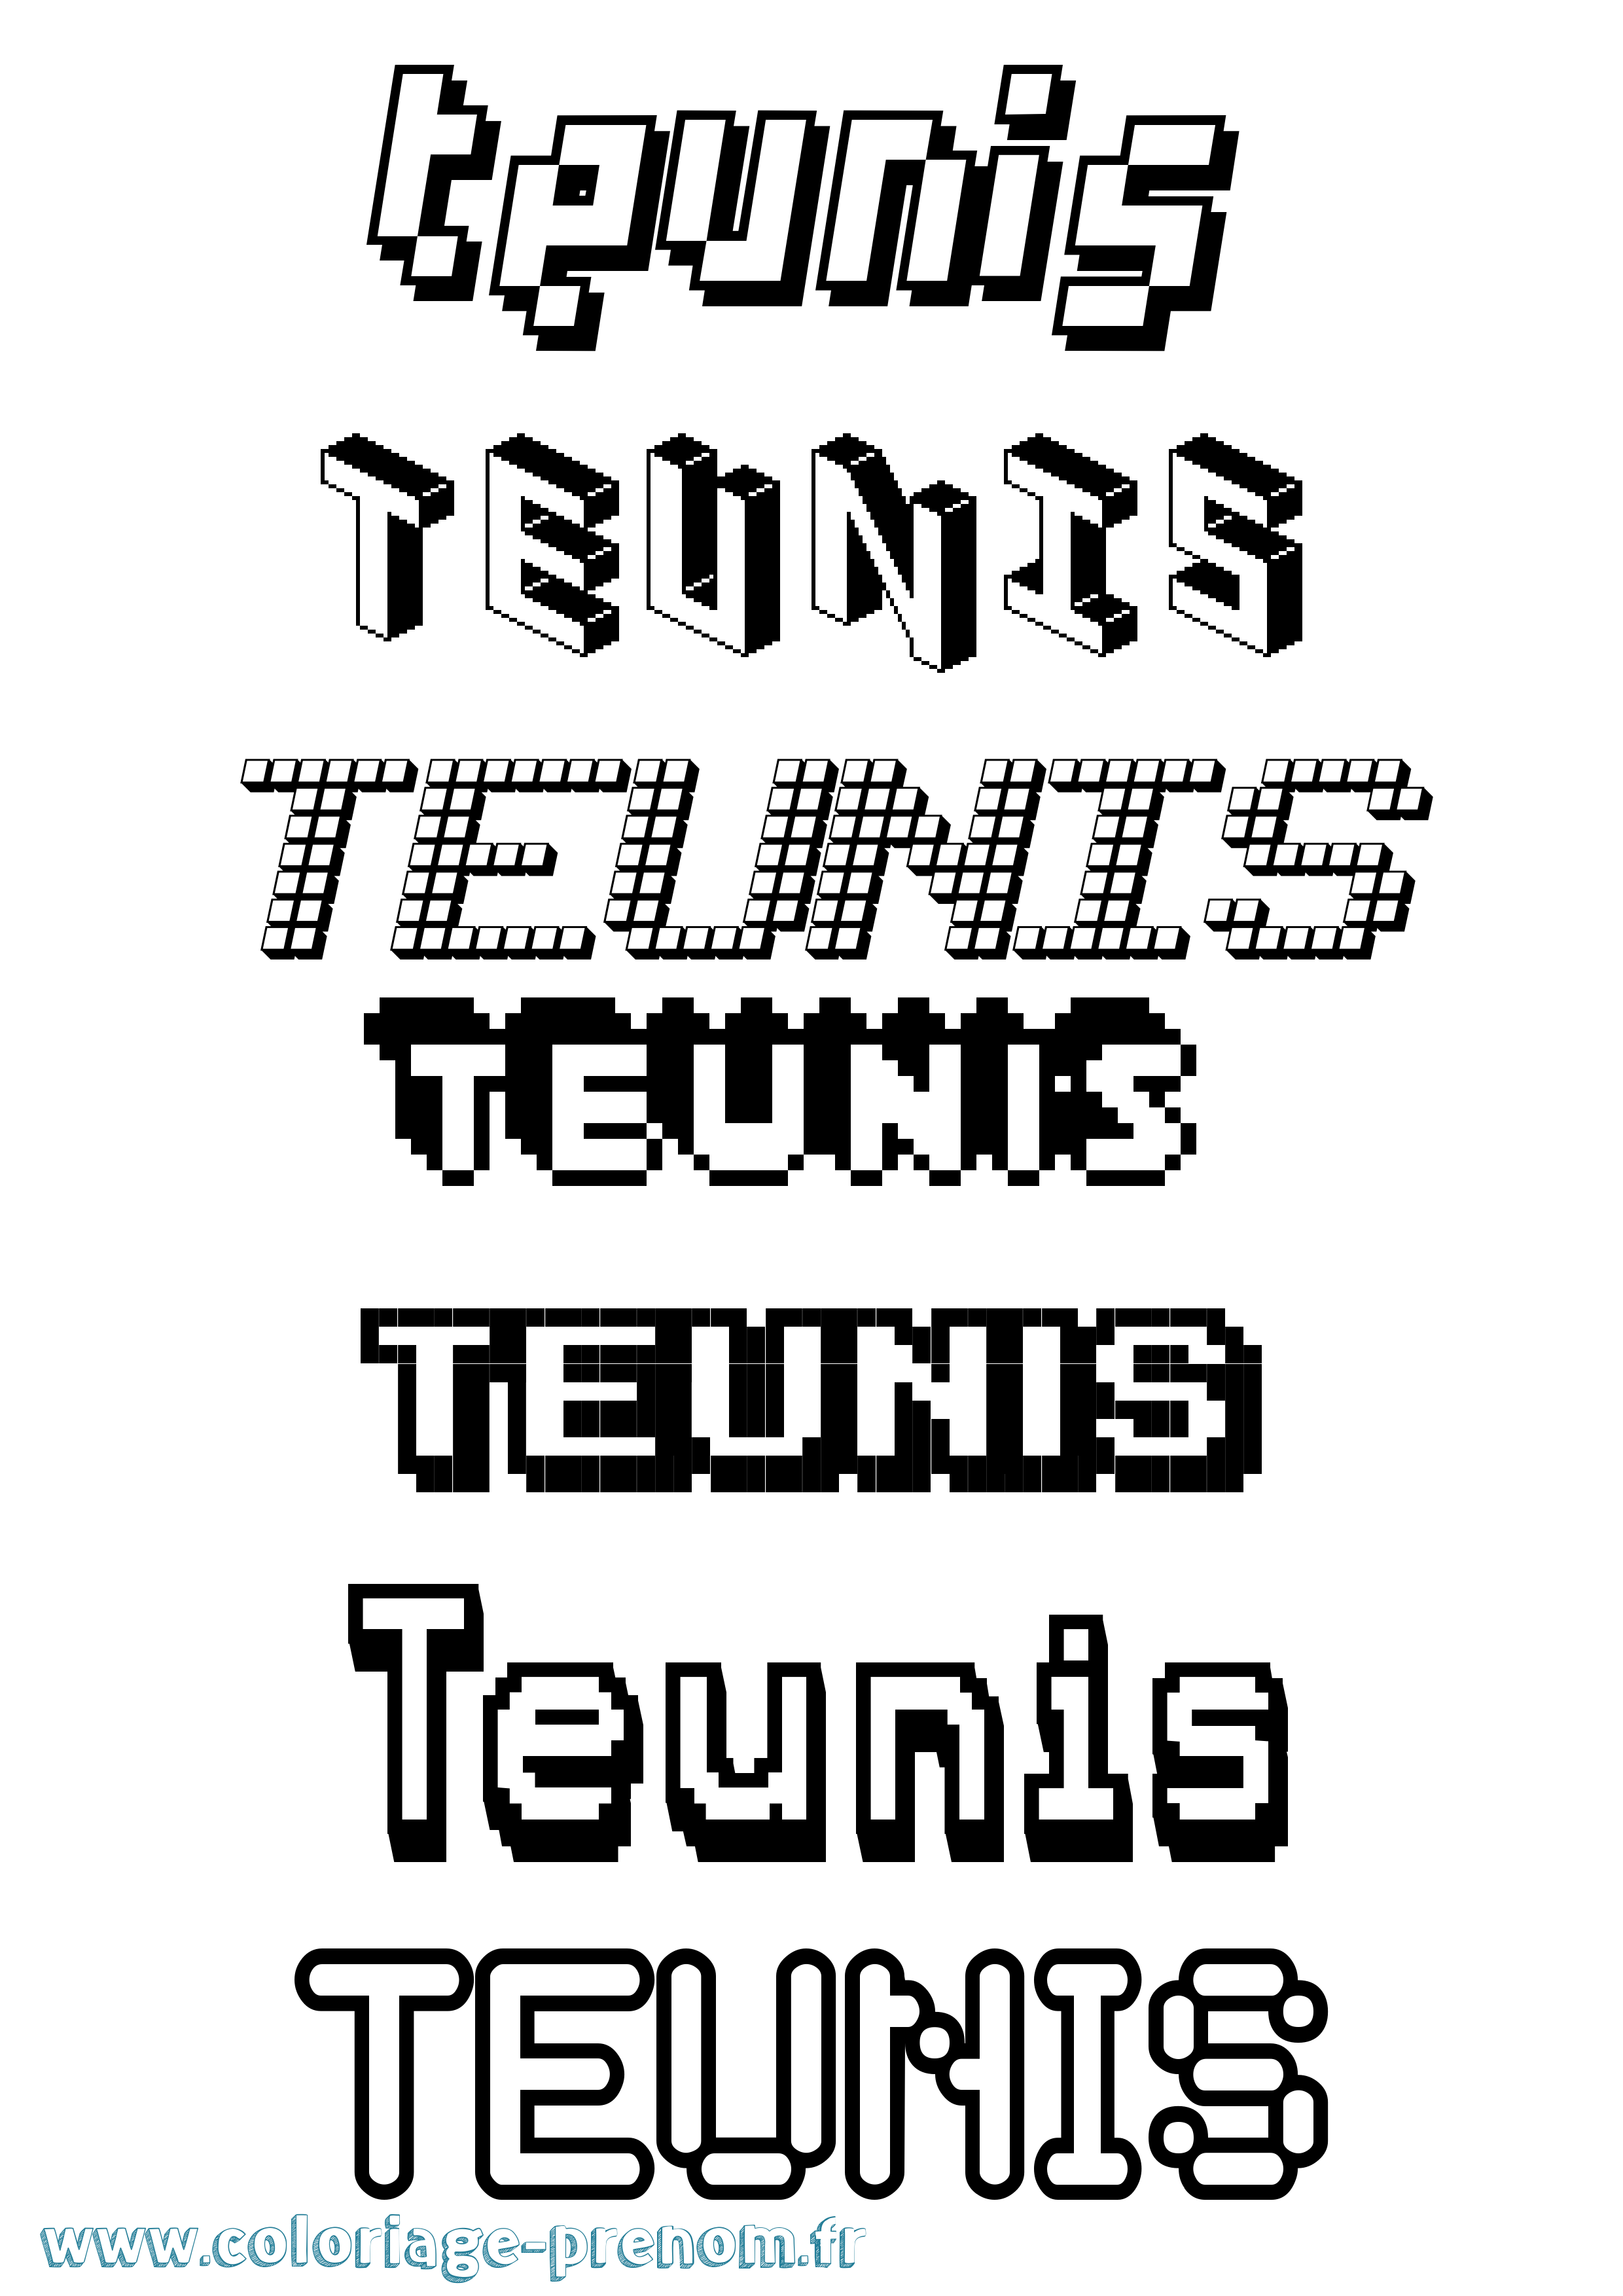 Coloriage prénom Teunis Pixel